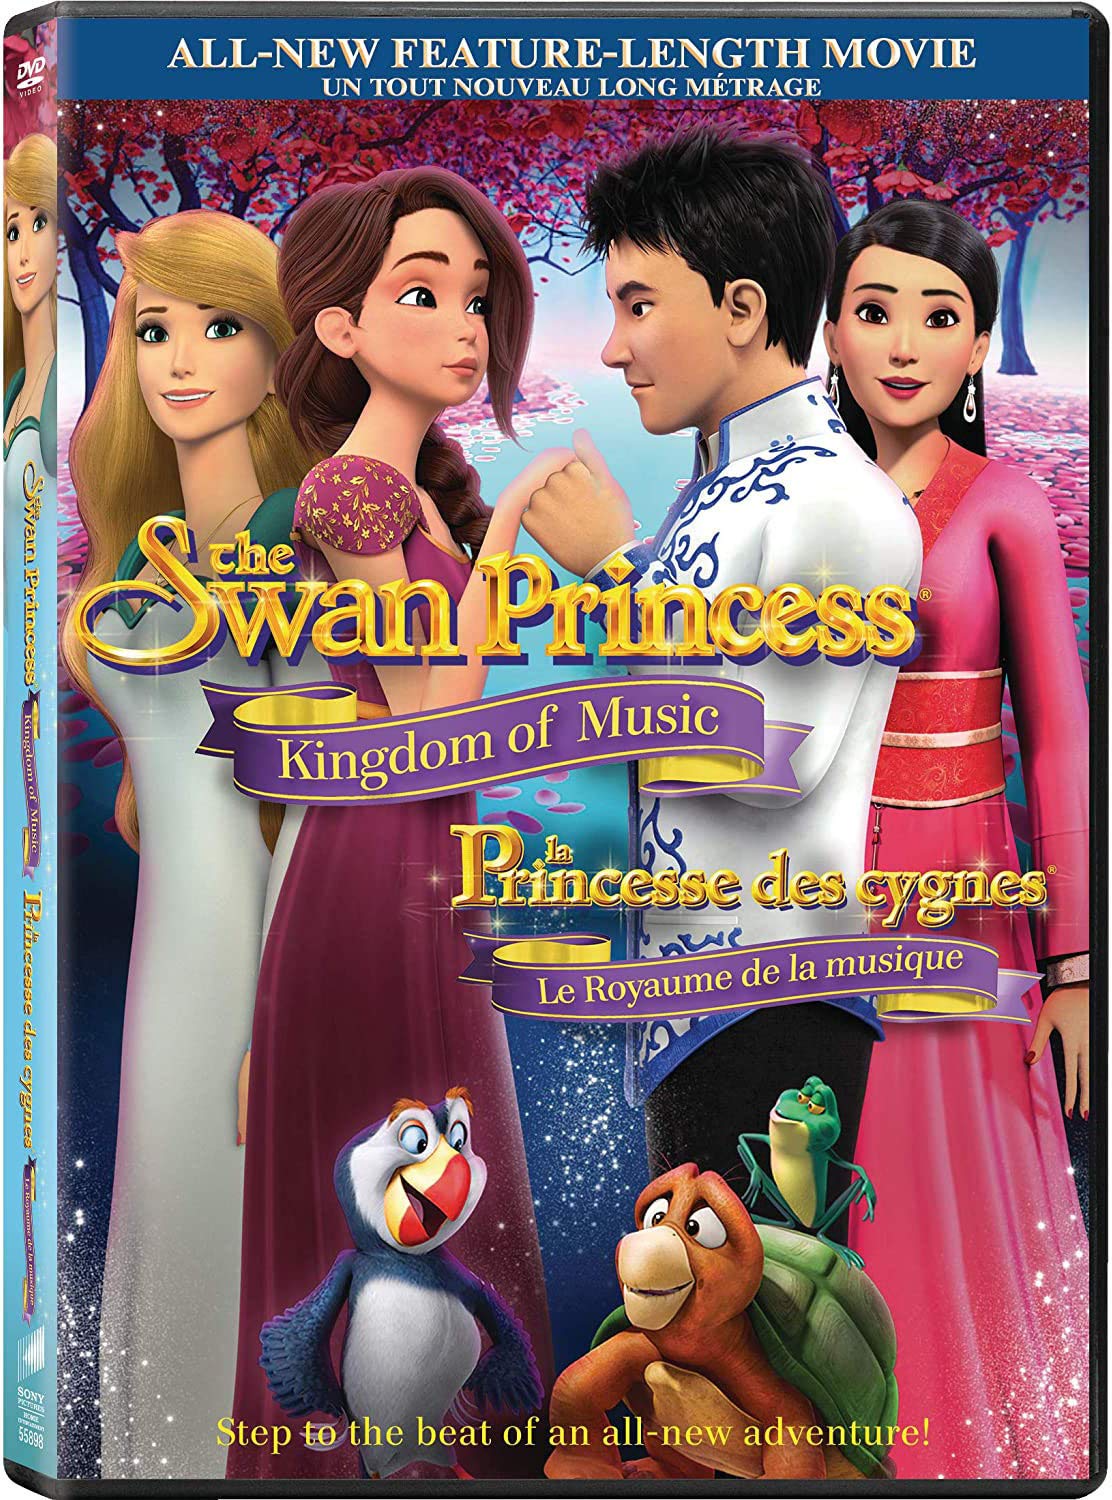 SWAN PRINCESS: KINGDOM OF MUSIC THE on MovieShack